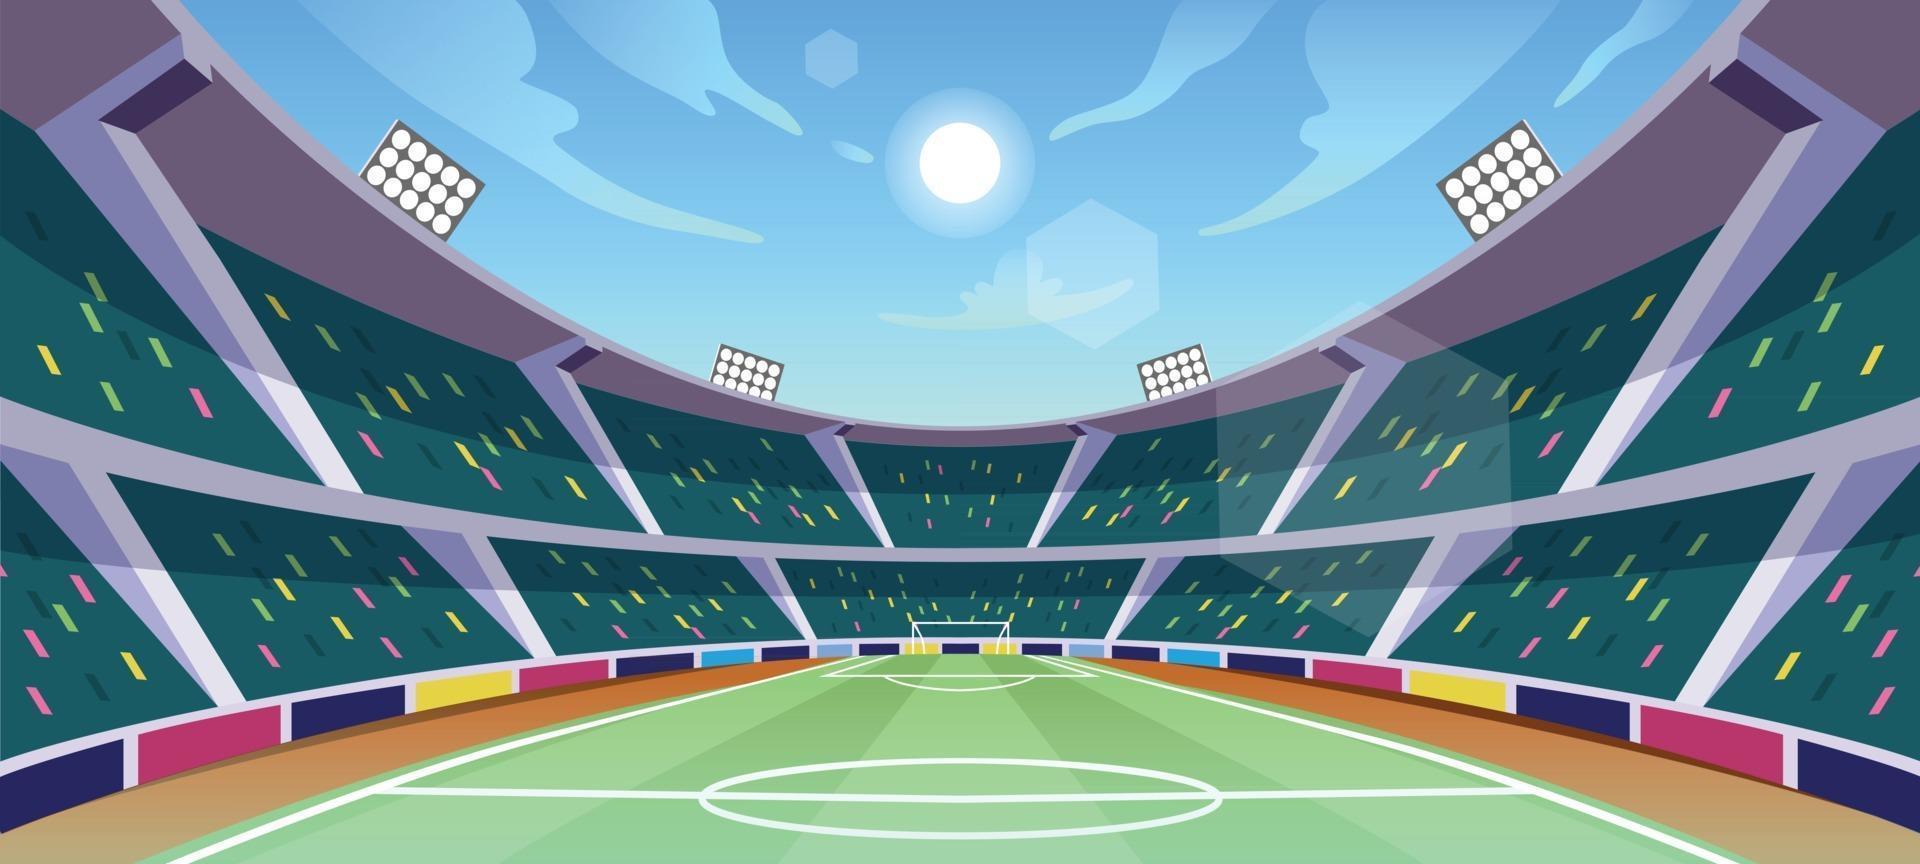 Soccer Stadium Background Vector Art At Vecteezy